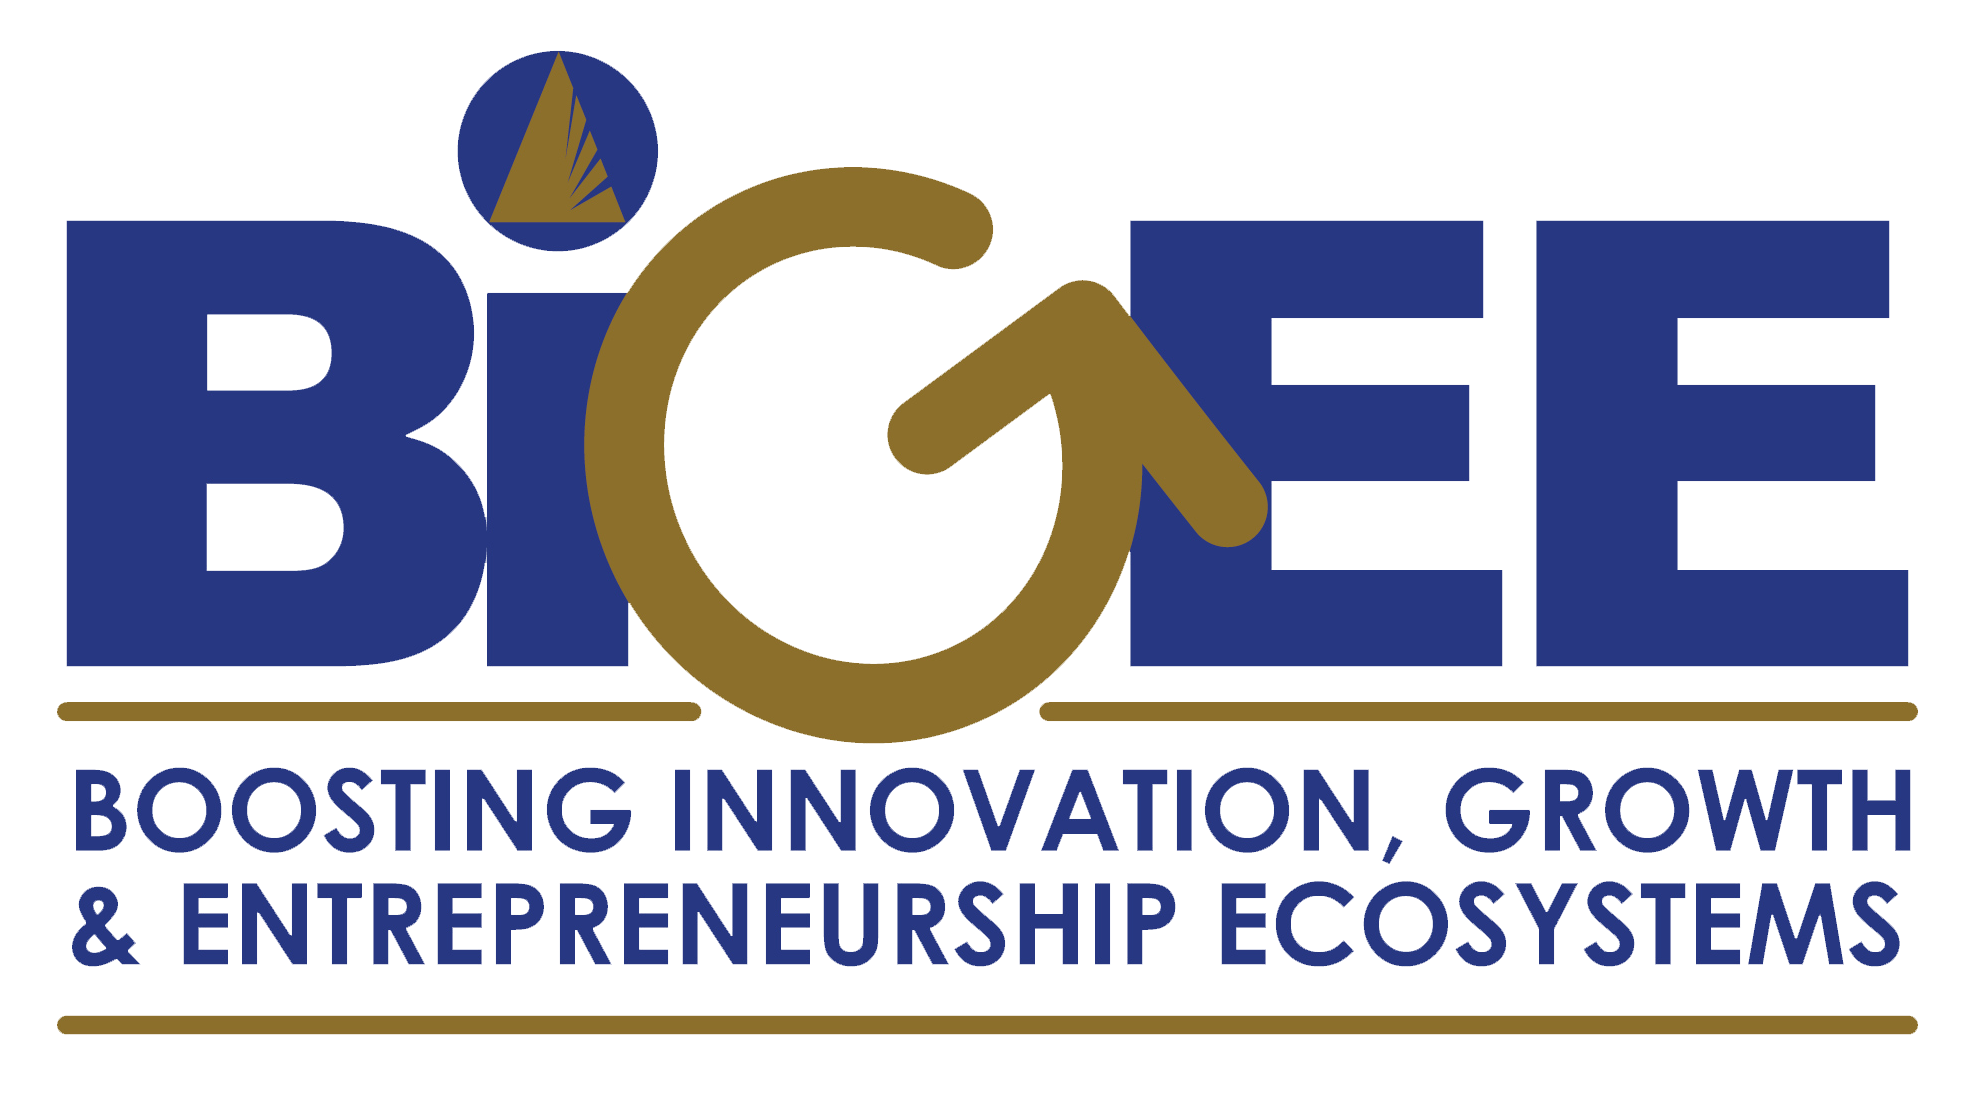 Boosting Innovation, Growth & Entrepreneurship Ecosystems